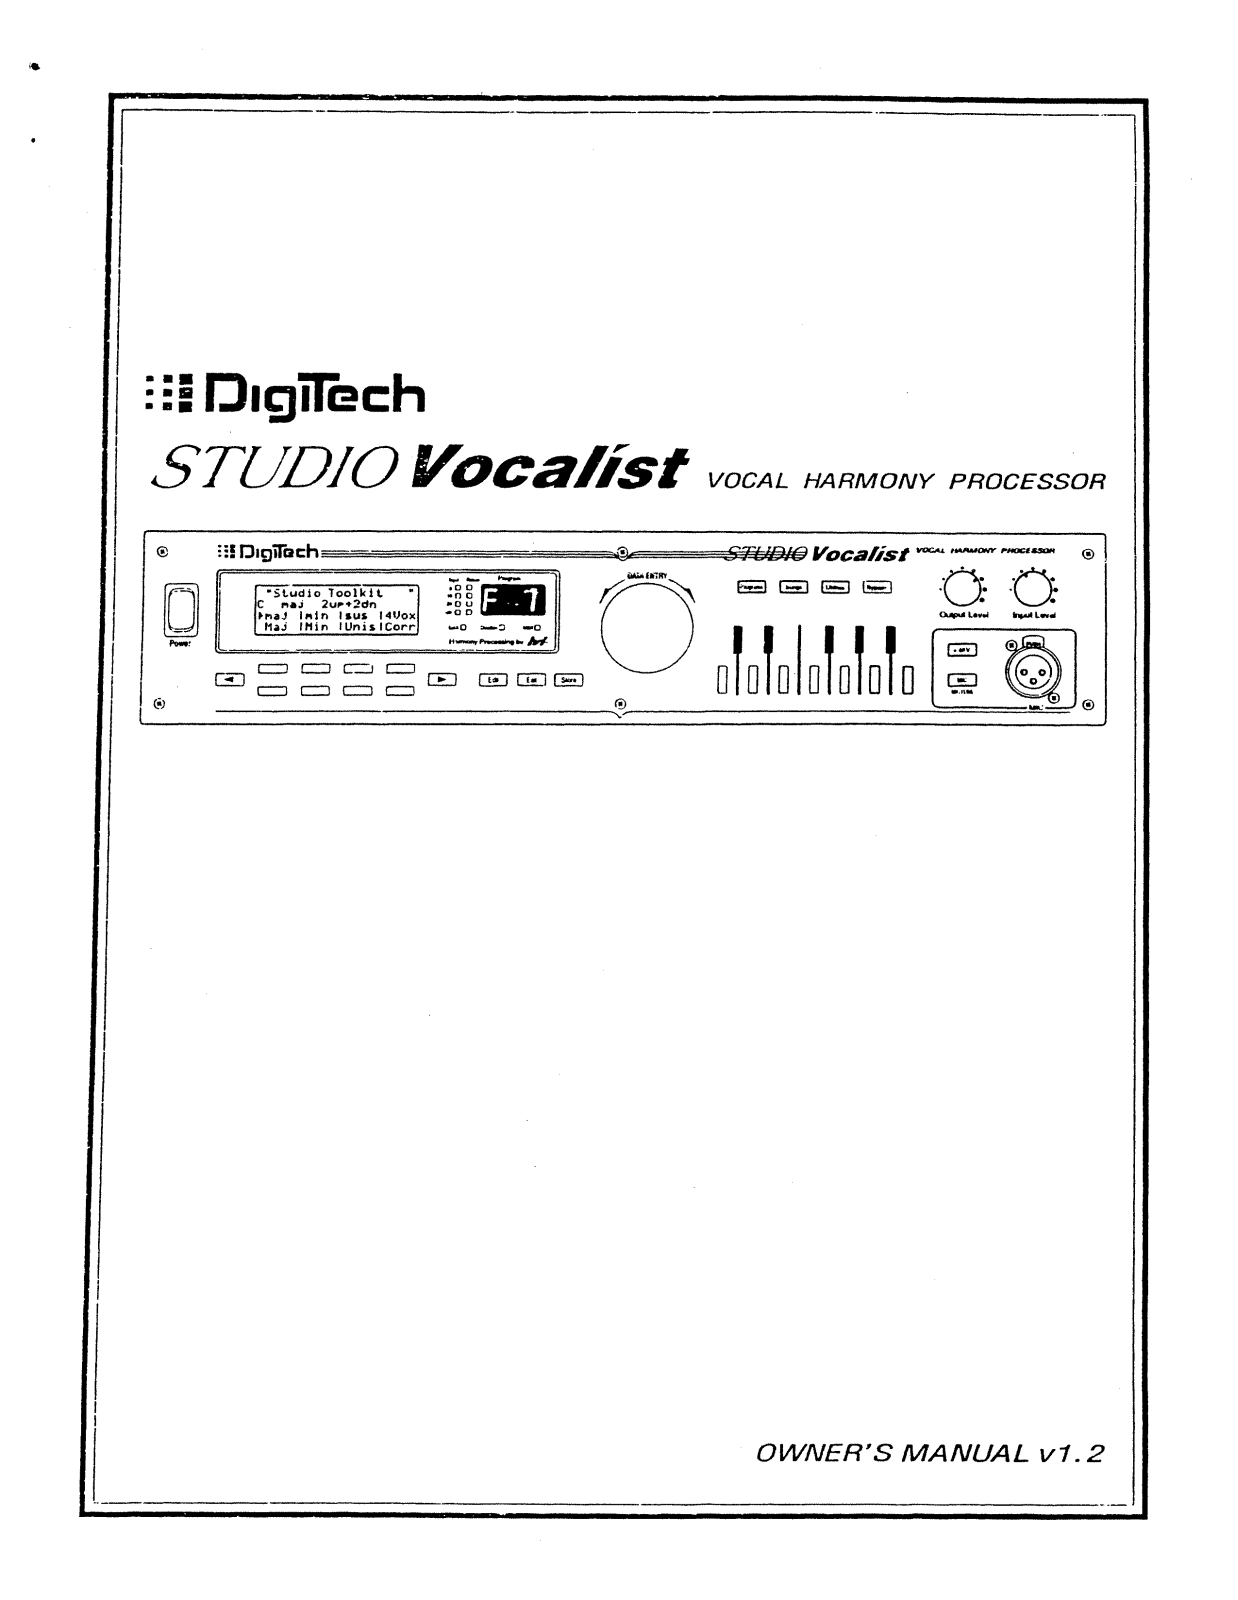 DigiTech STUDIO VOCALIST User Manual